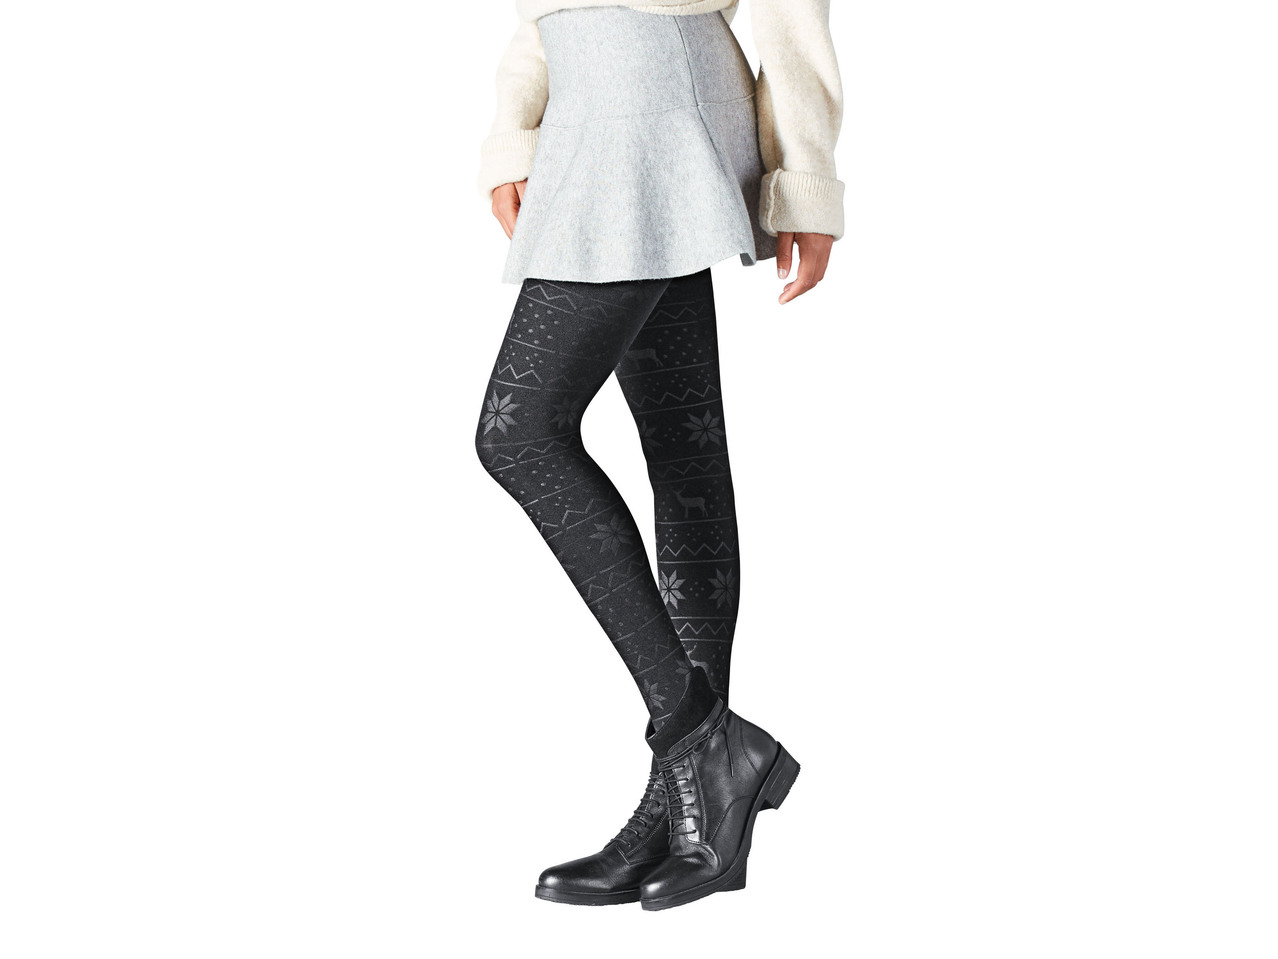 Collant o leggings termici da donna - Clima Comfort